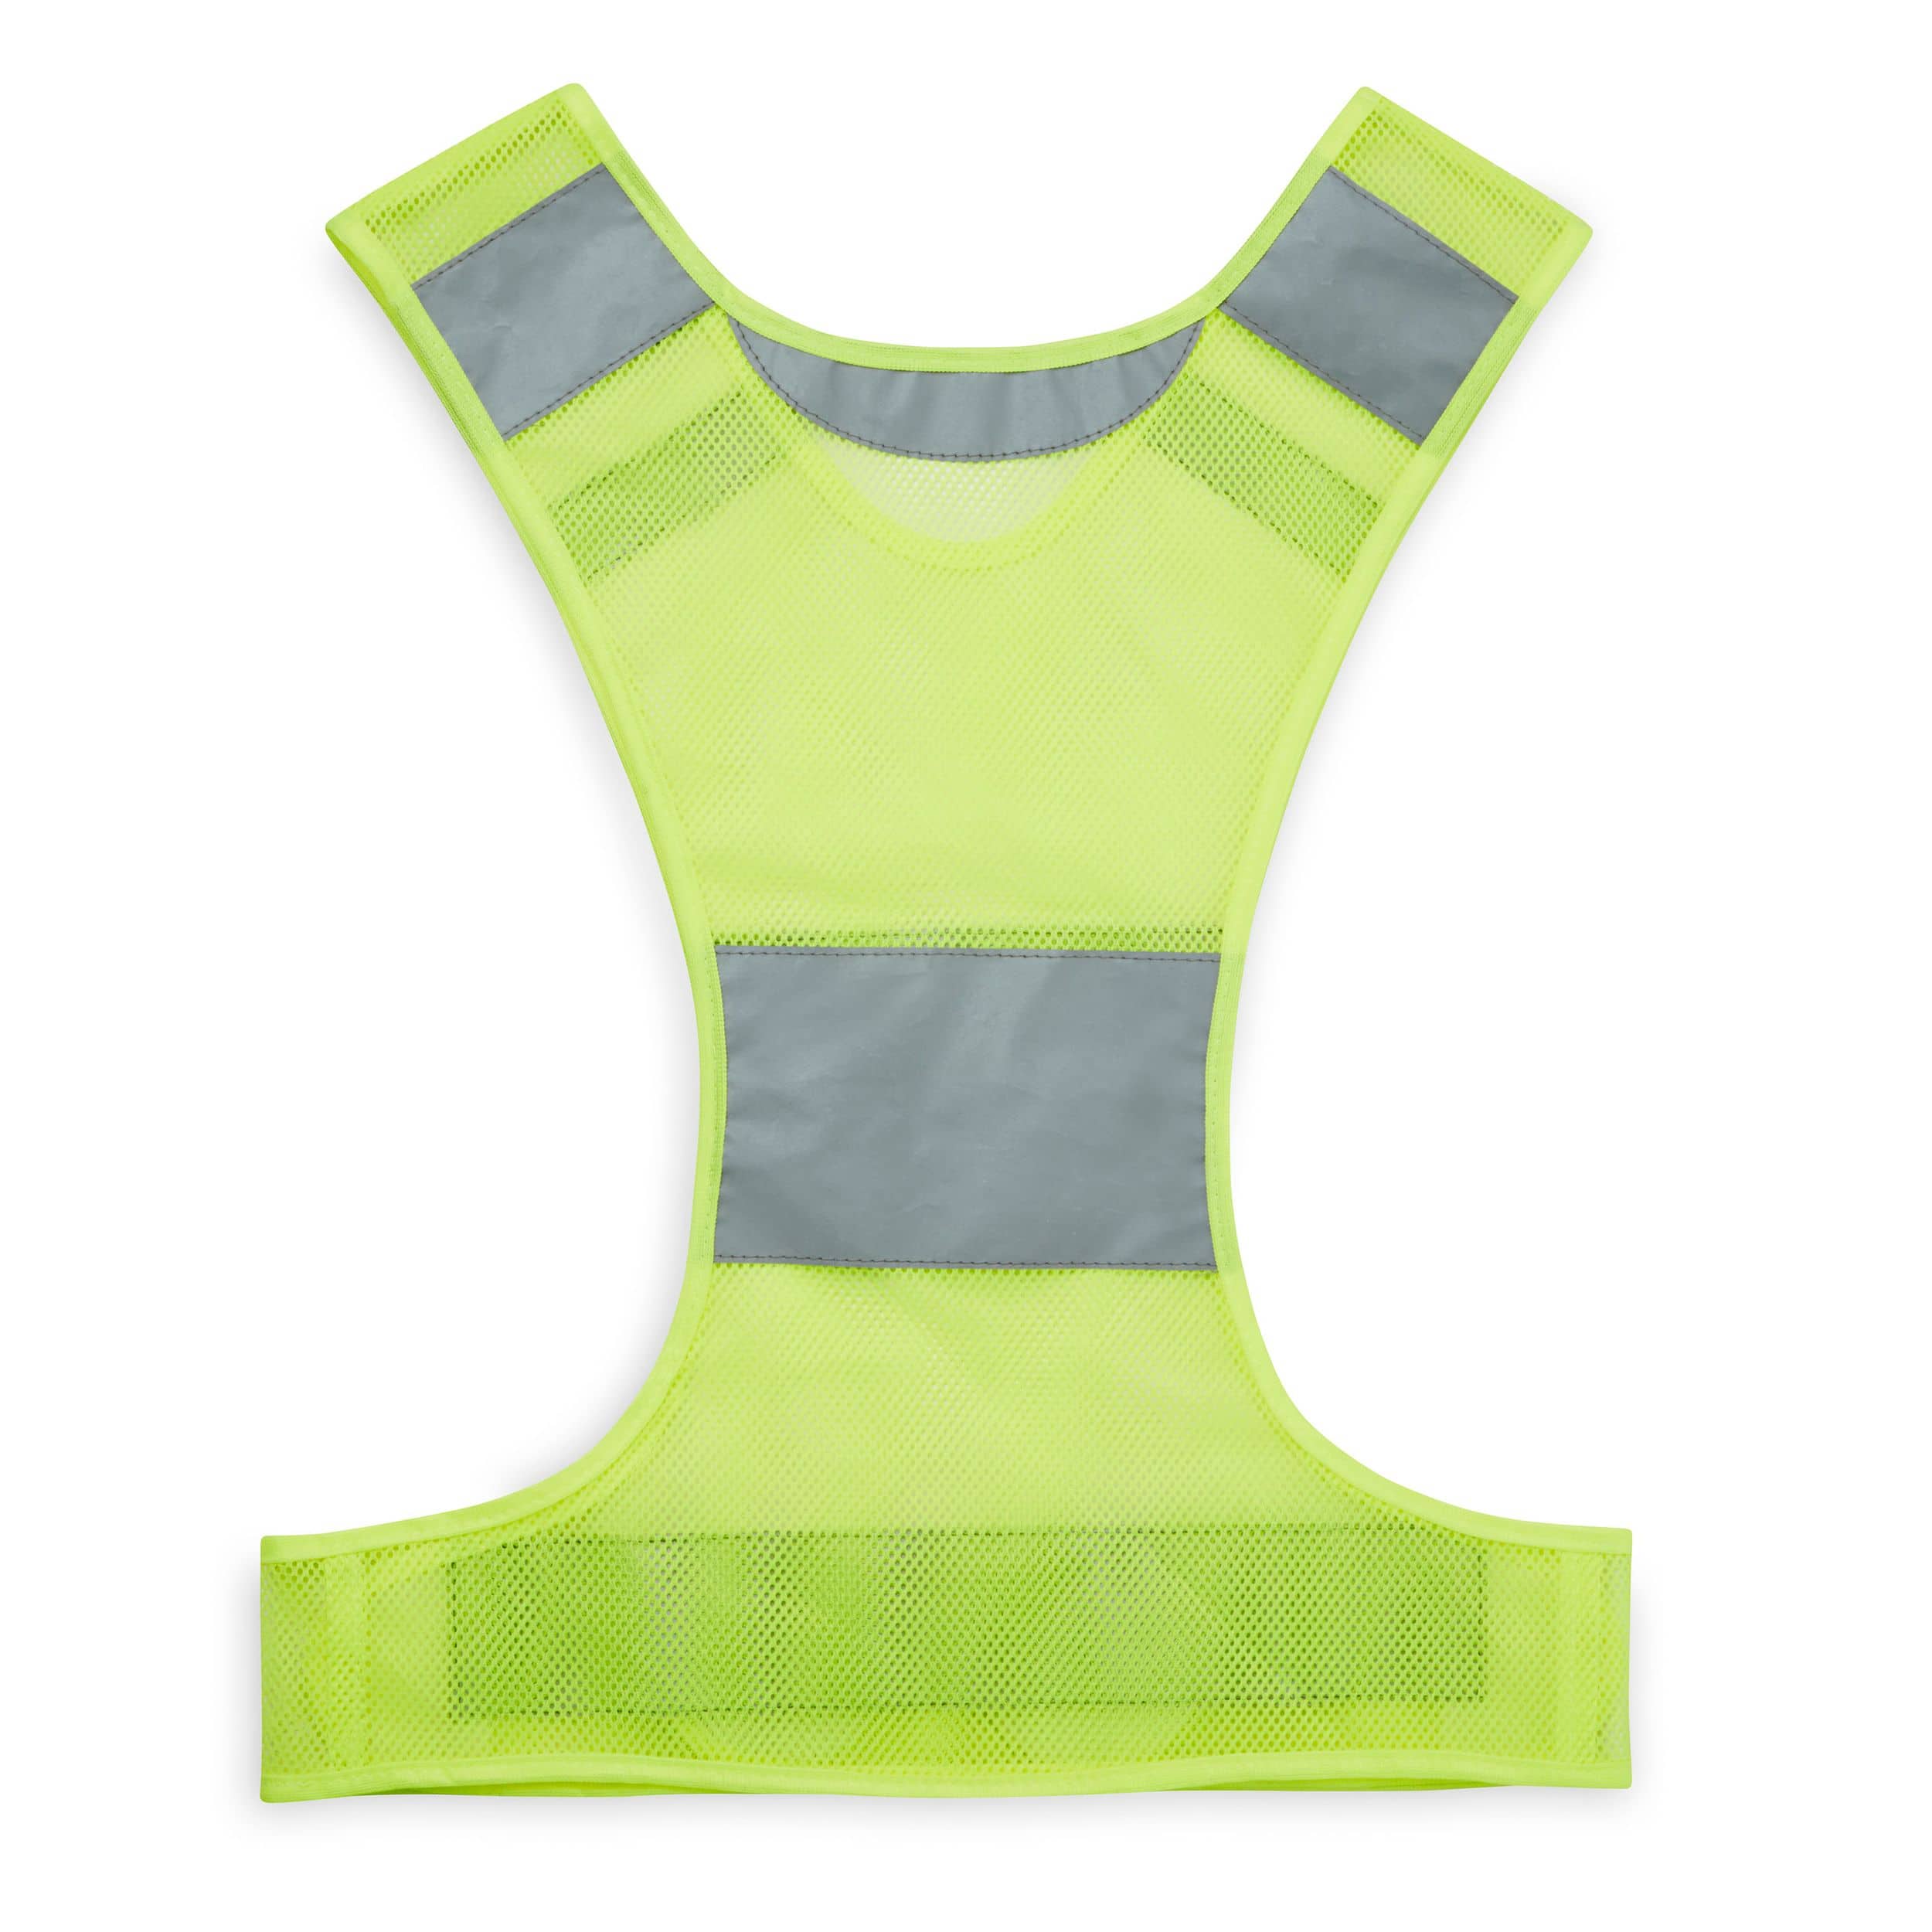 Gaiam Reflective Safety Running Gear Vest, One Size